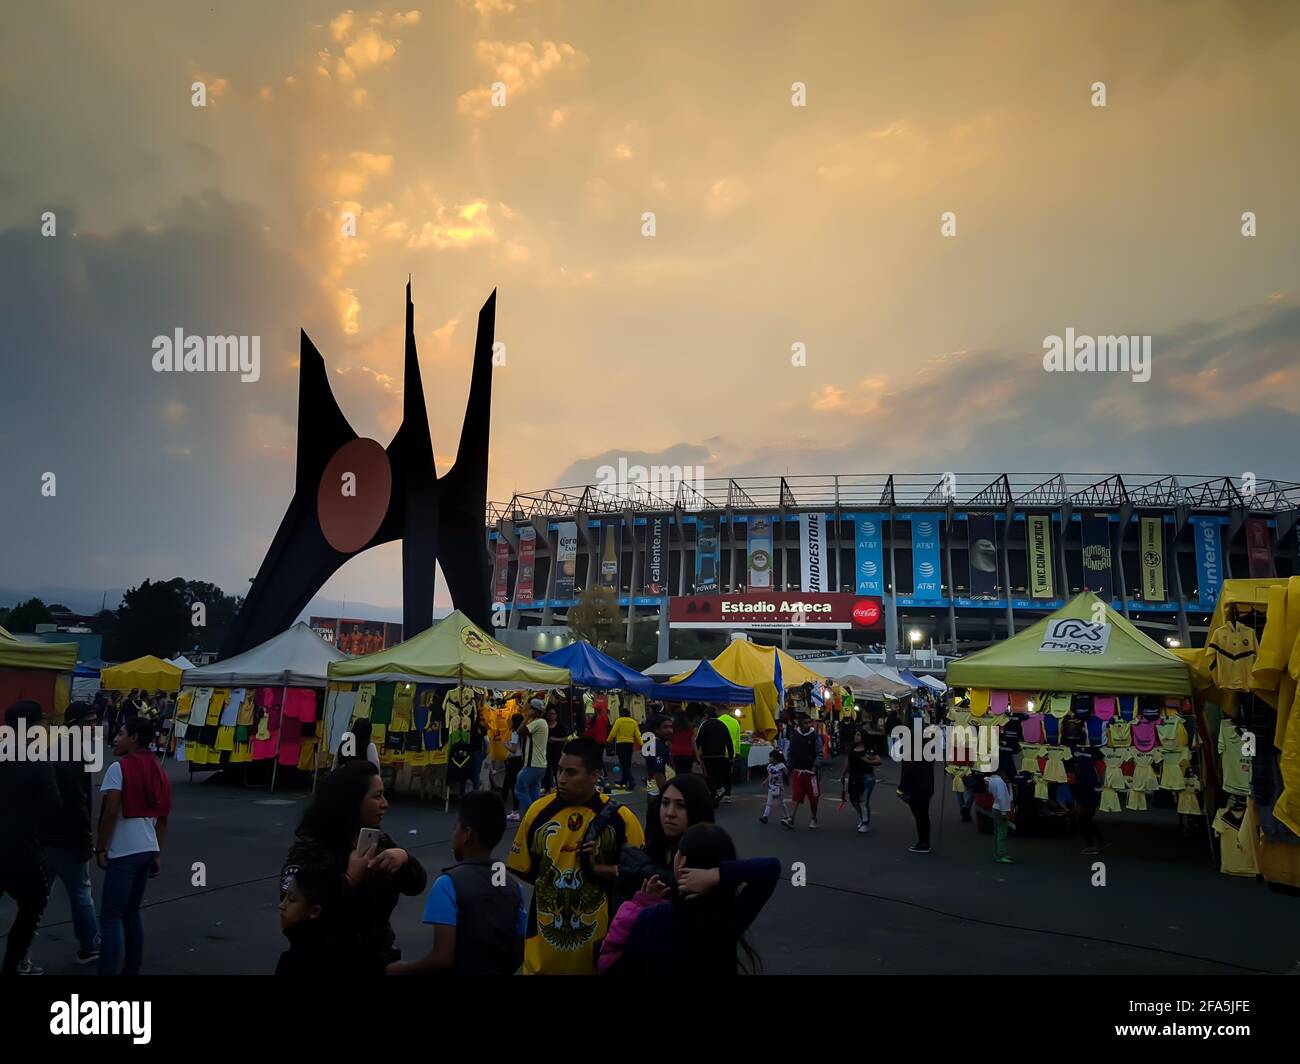 Azteca Stadium in a match day. Beautiful sunset. Crowd arriving at stadium. America vs Puebla. Stock Photo